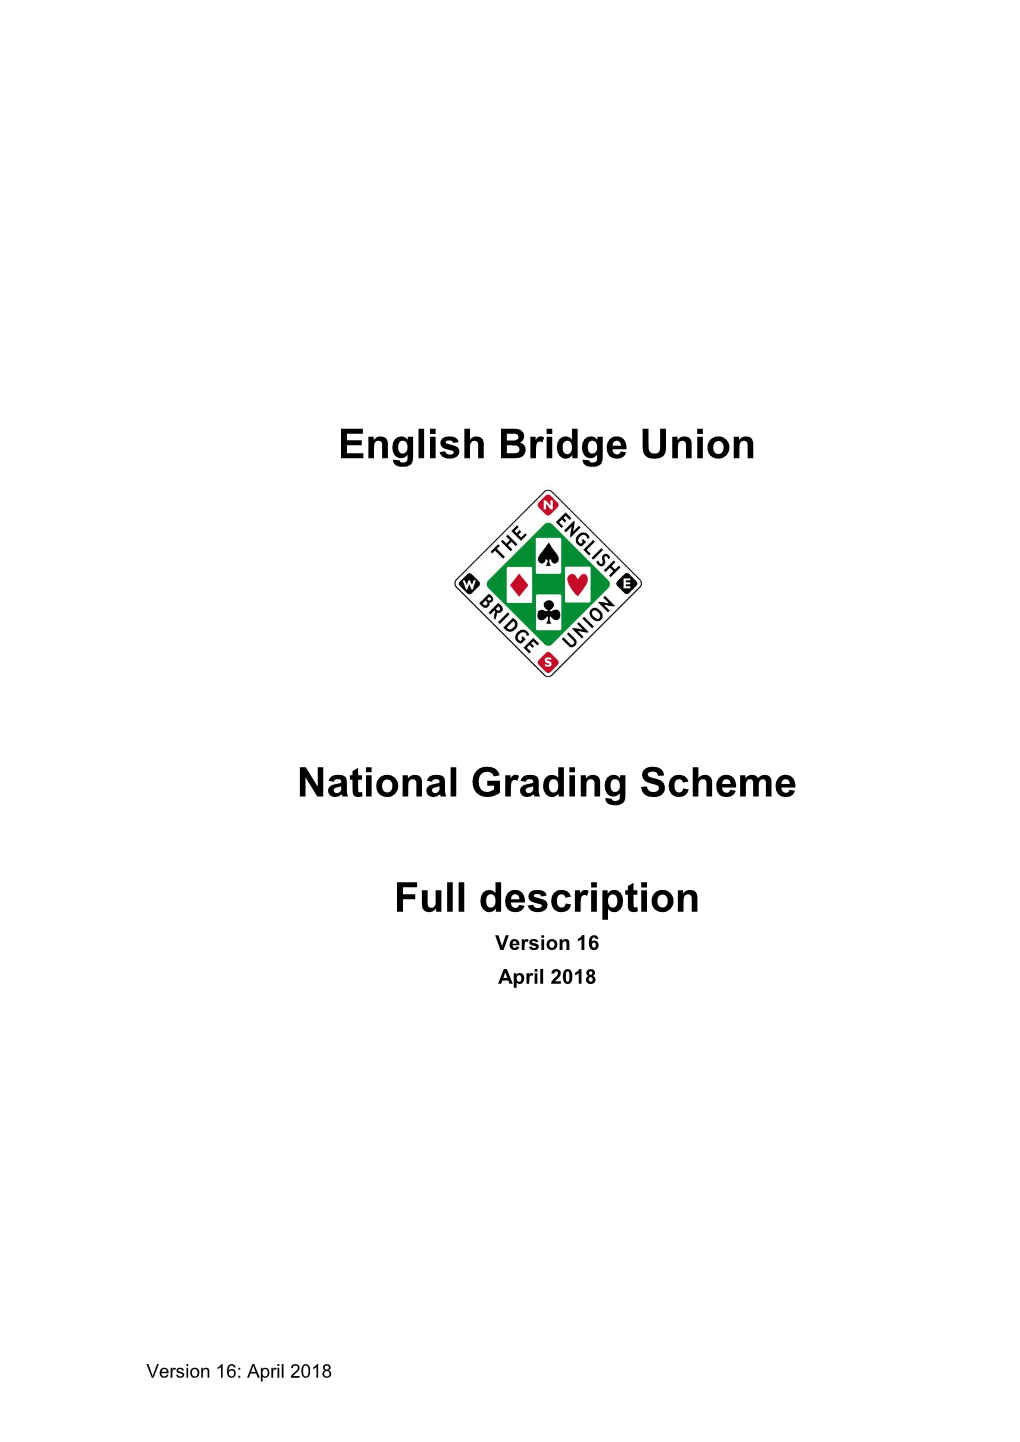 English Bridge Union National Grading Scheme Full Description